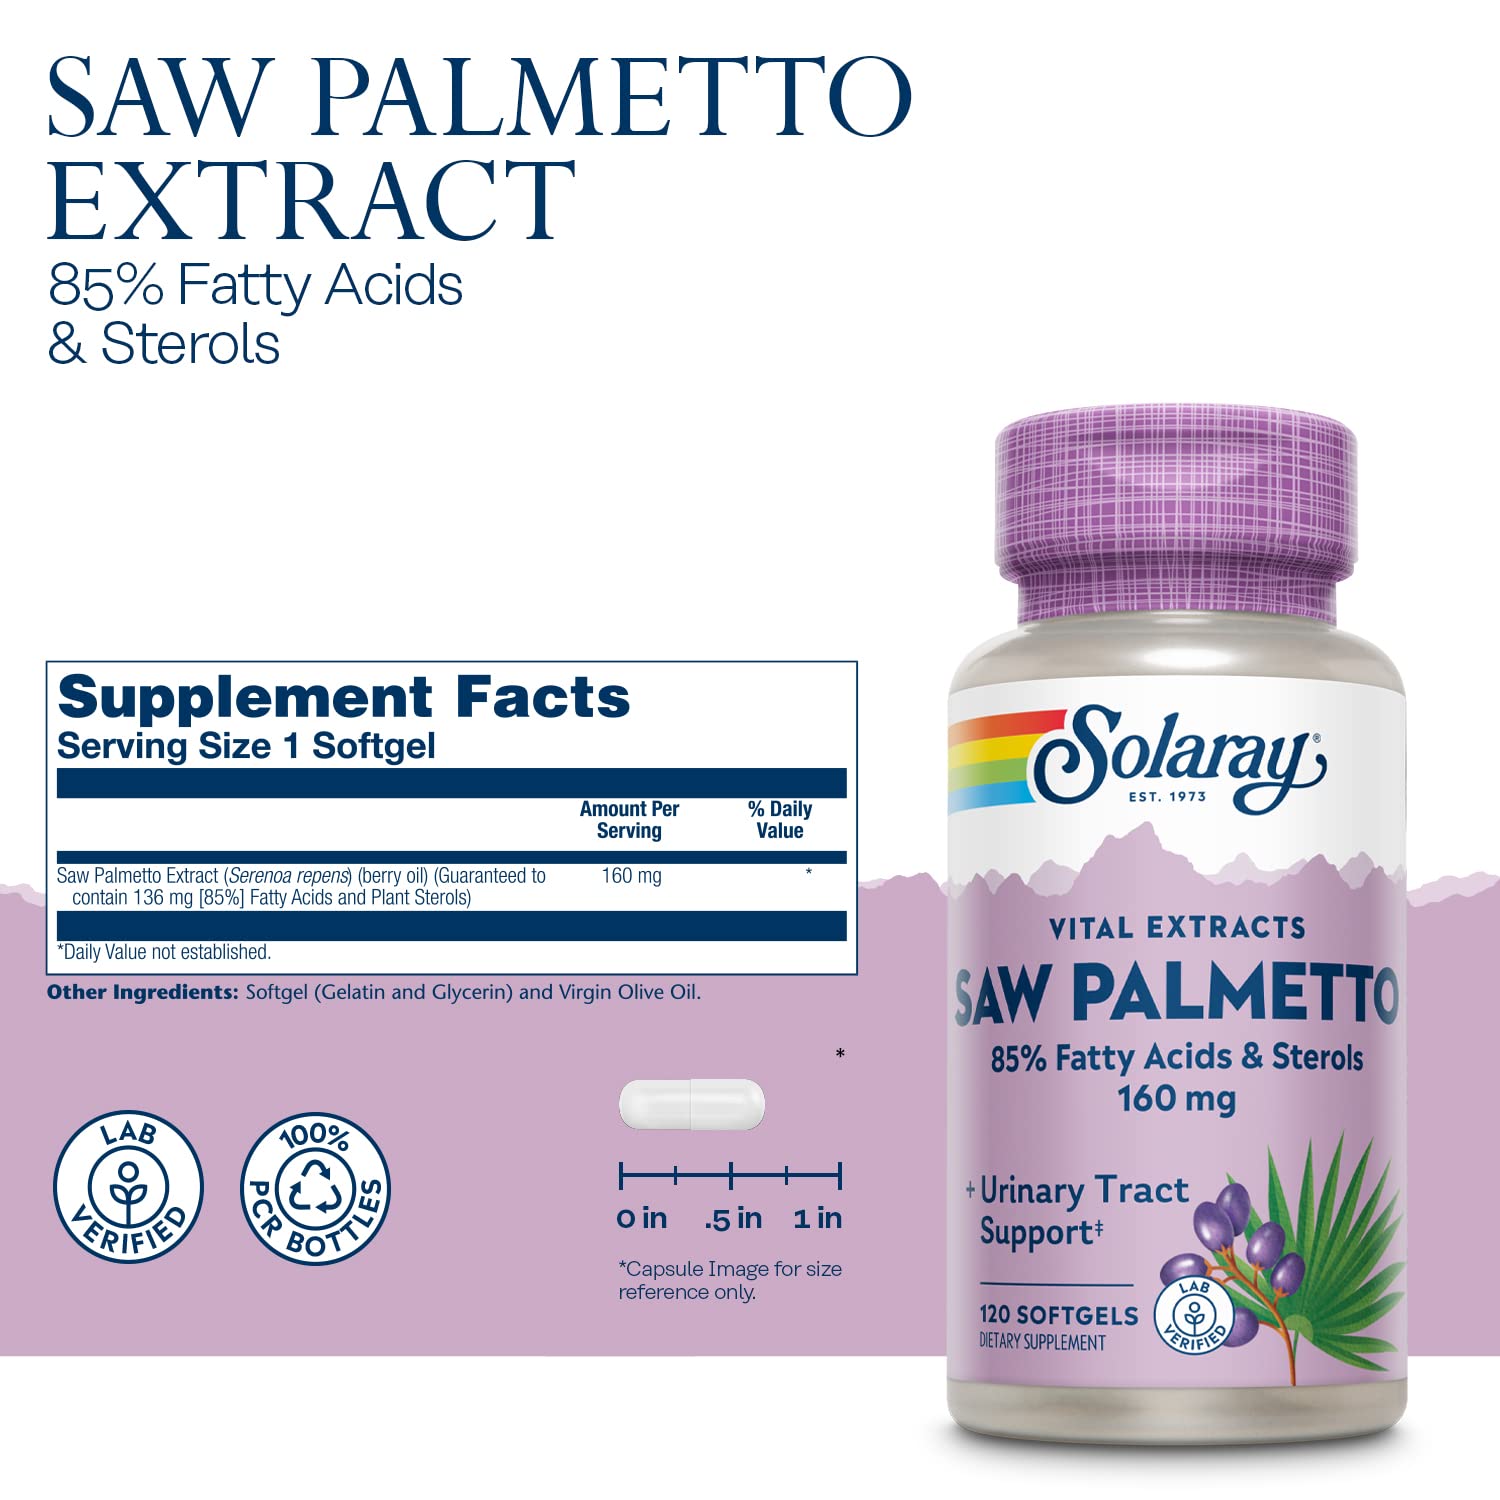 Solaray Saw Palmetto Berry Extract 120ct Softgel